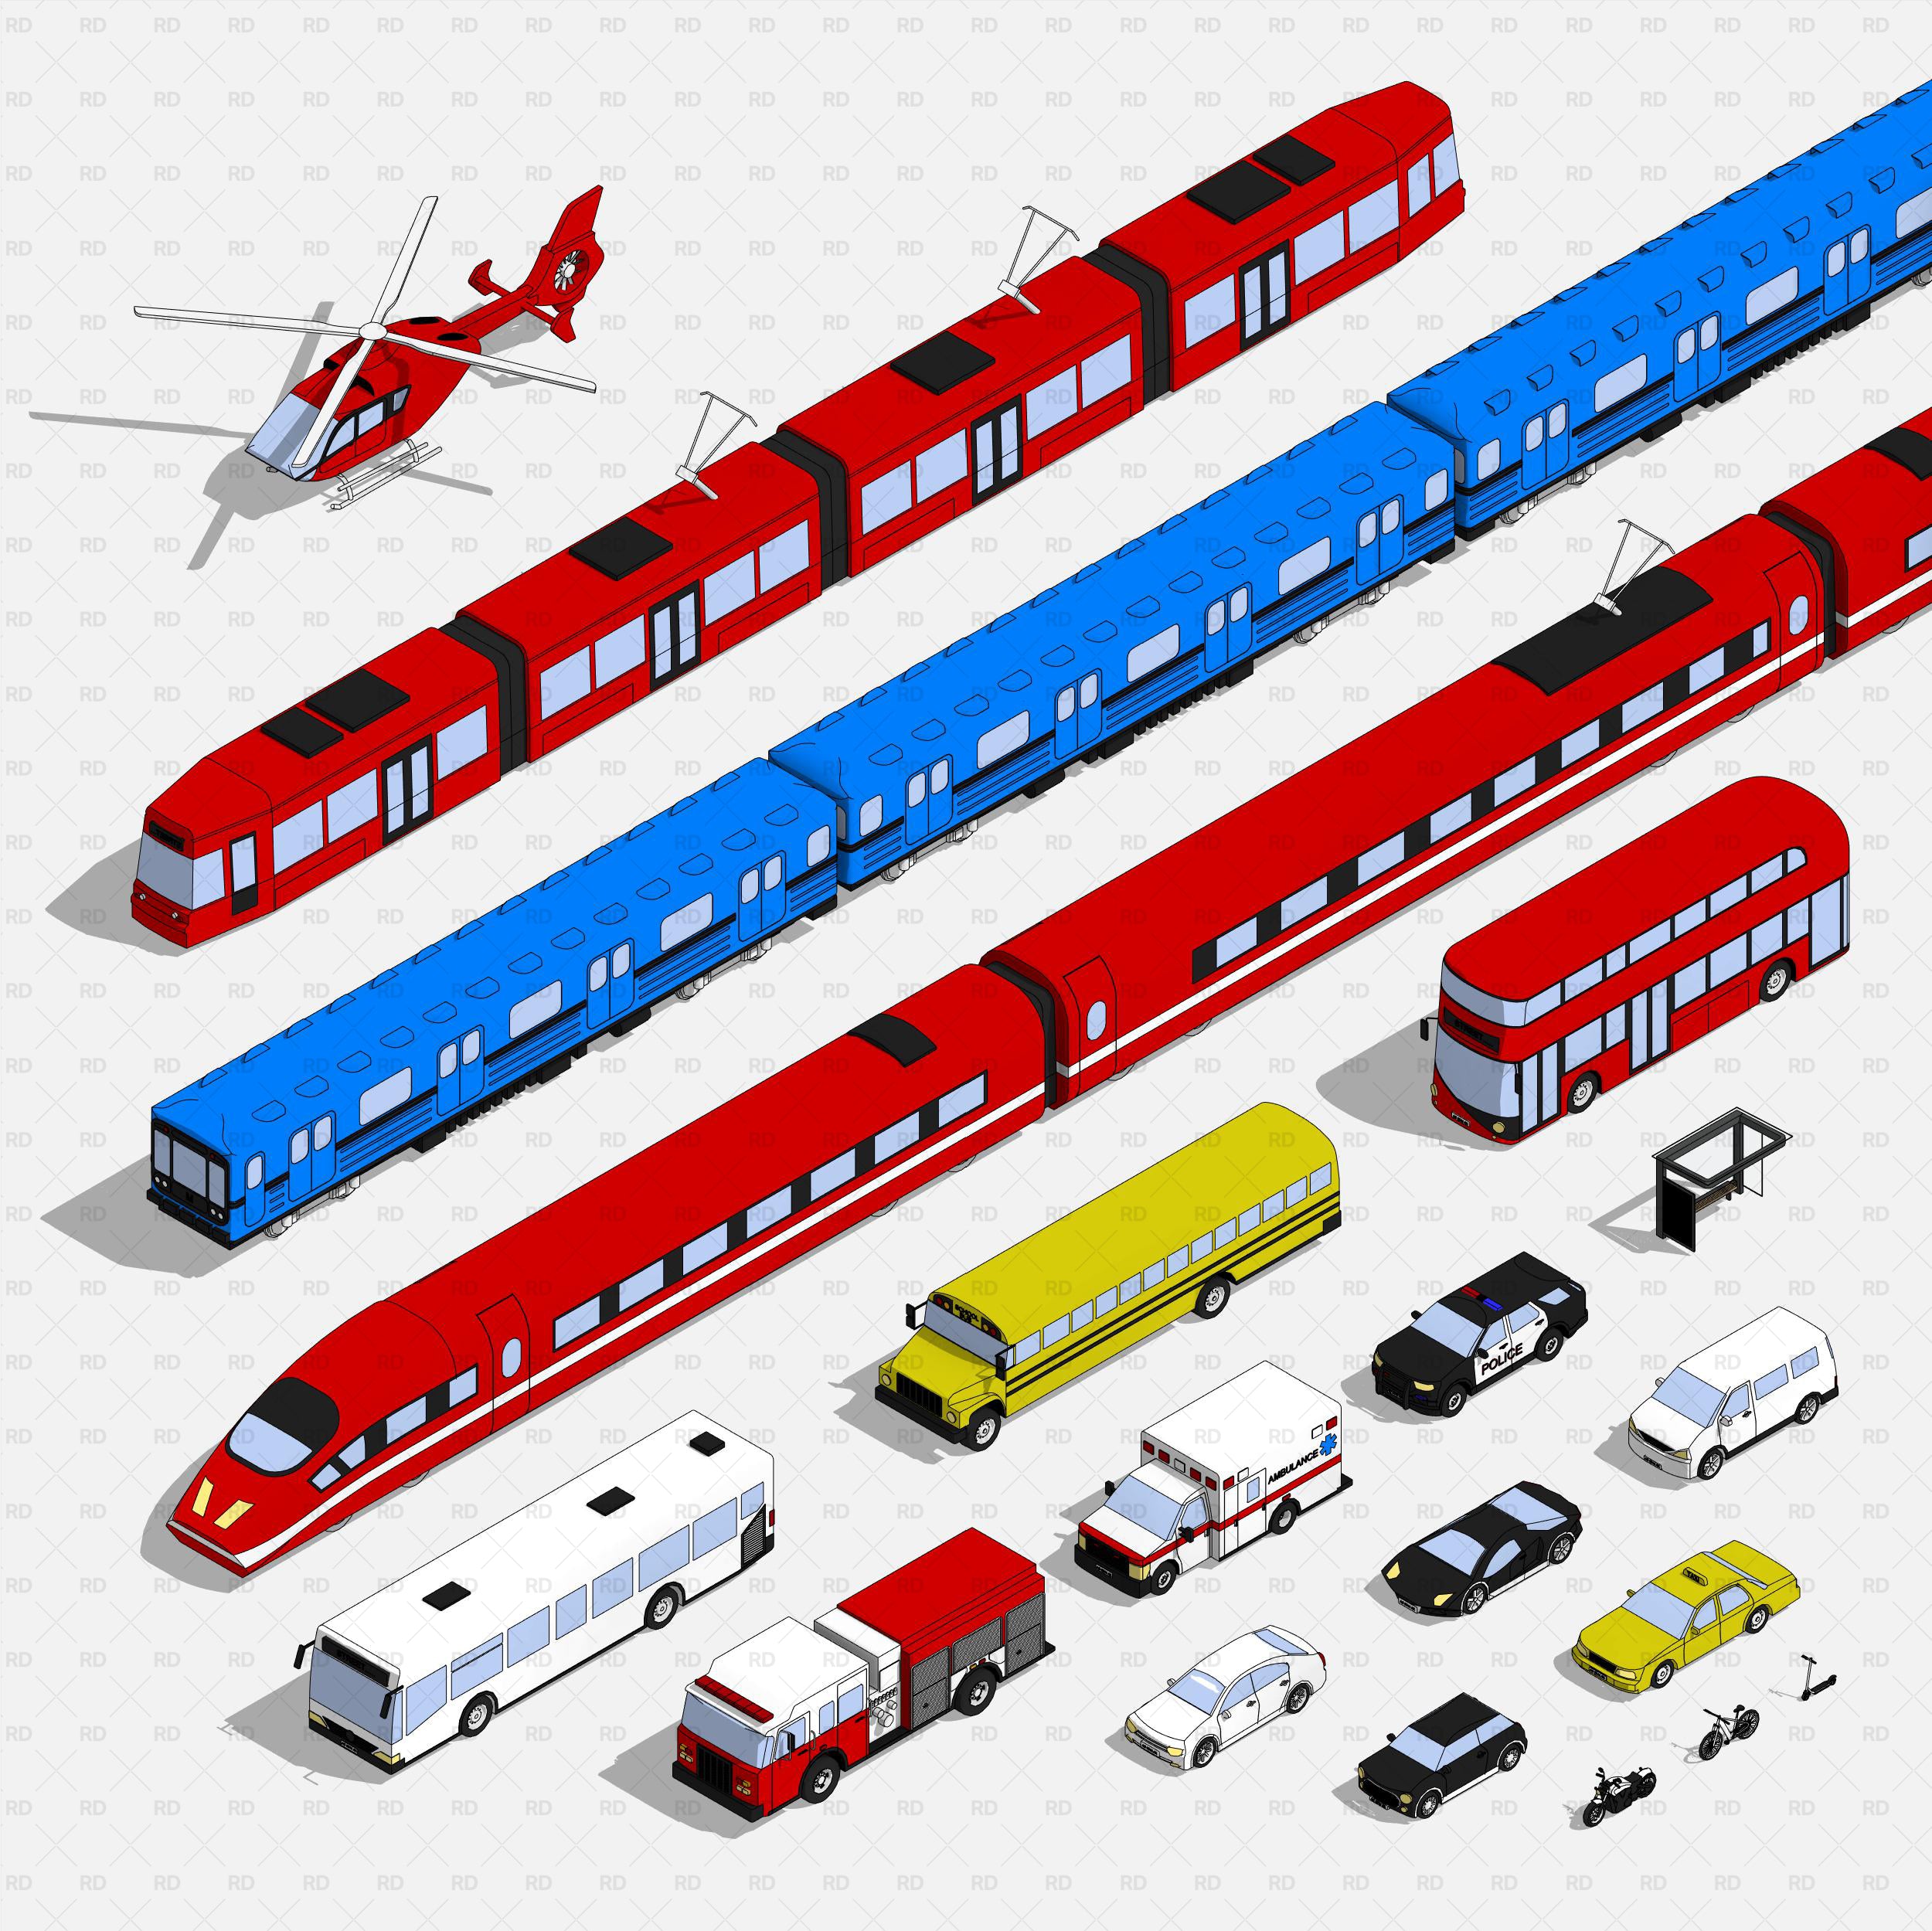 Revit Vehicles and Public Transportation Super Mega Pack